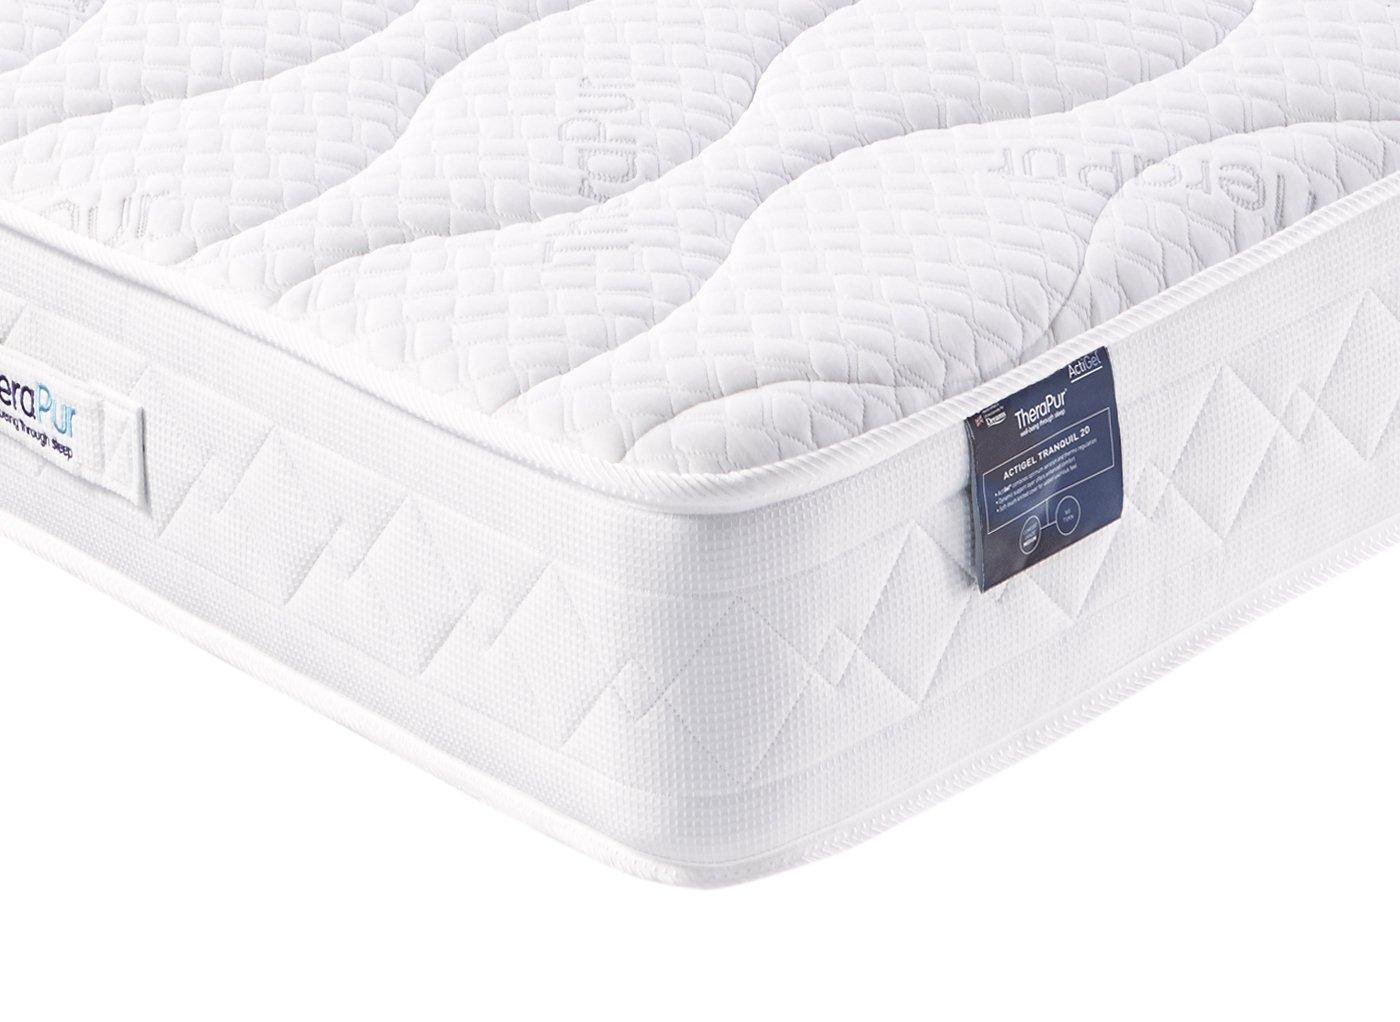 therapur actigel tranquil 800 mattress reviews